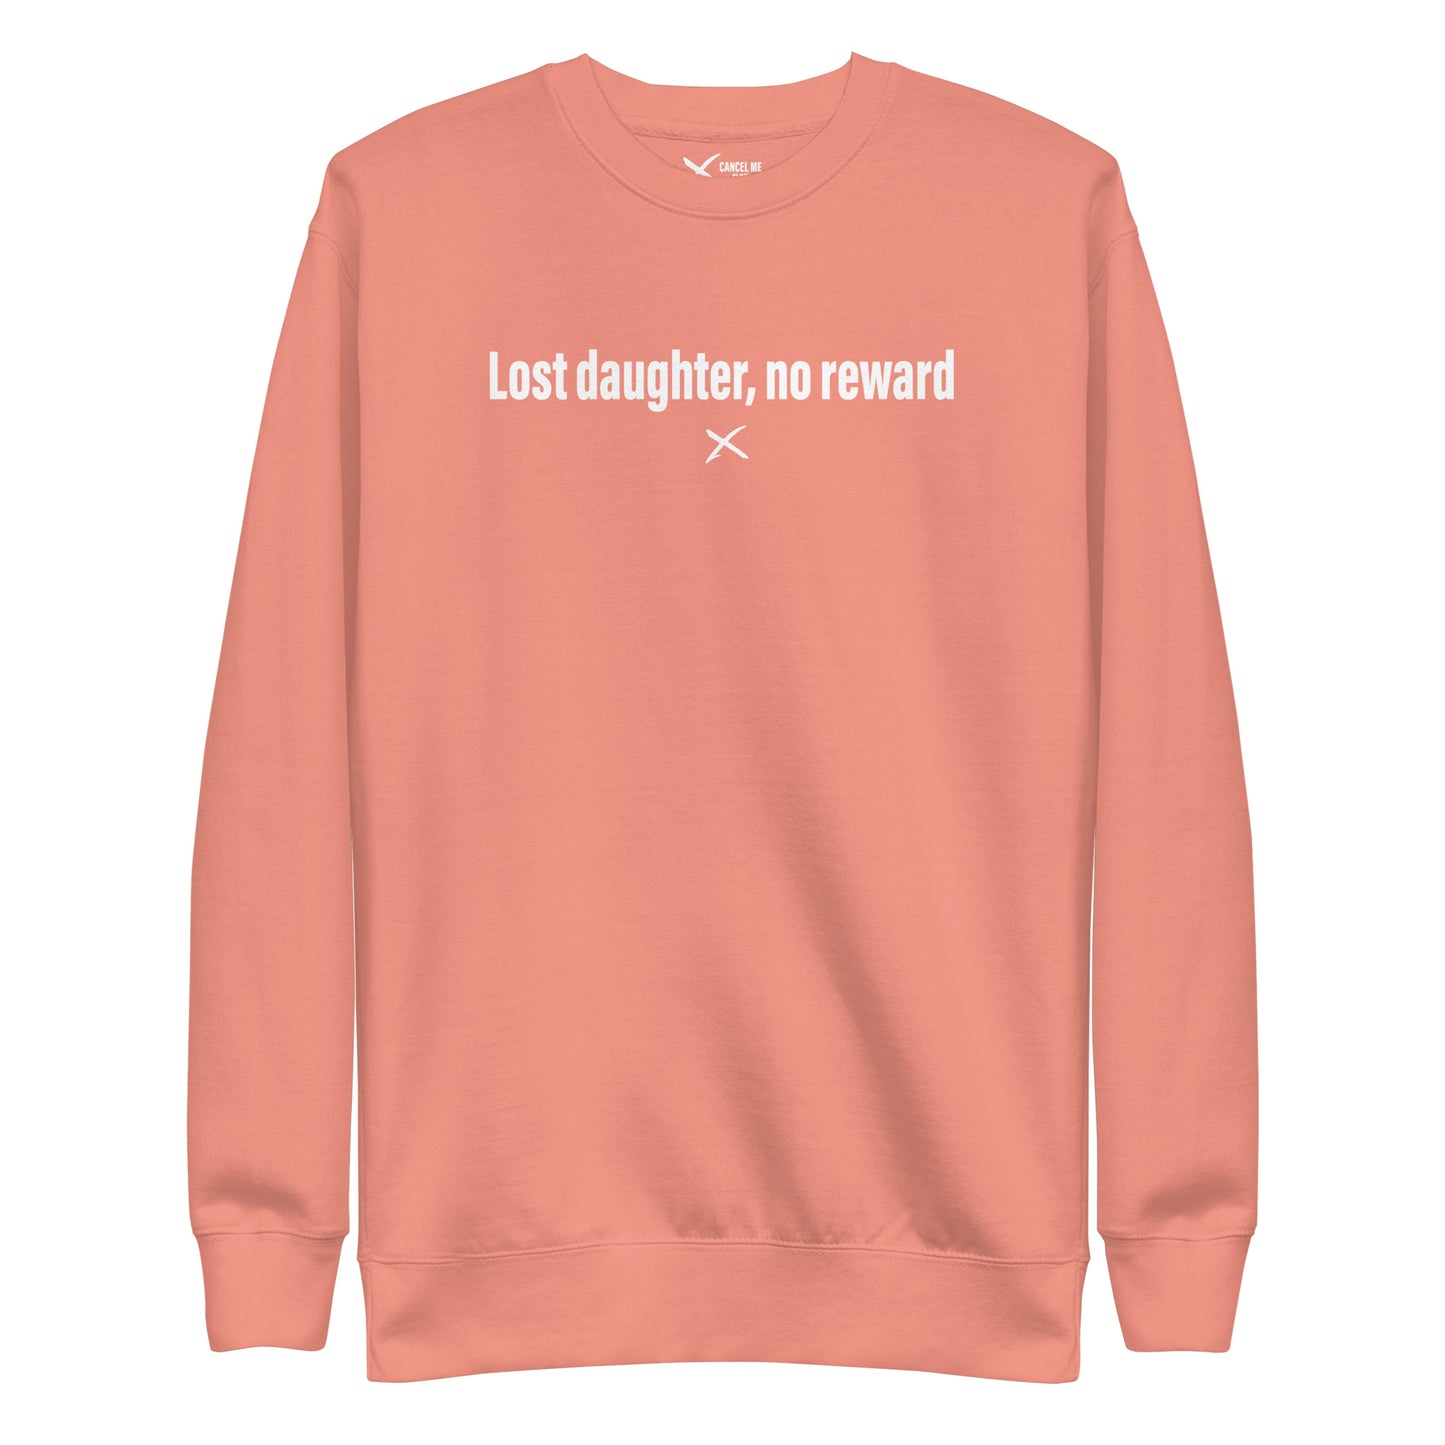 Lost daughter, no reward - Sweatshirt